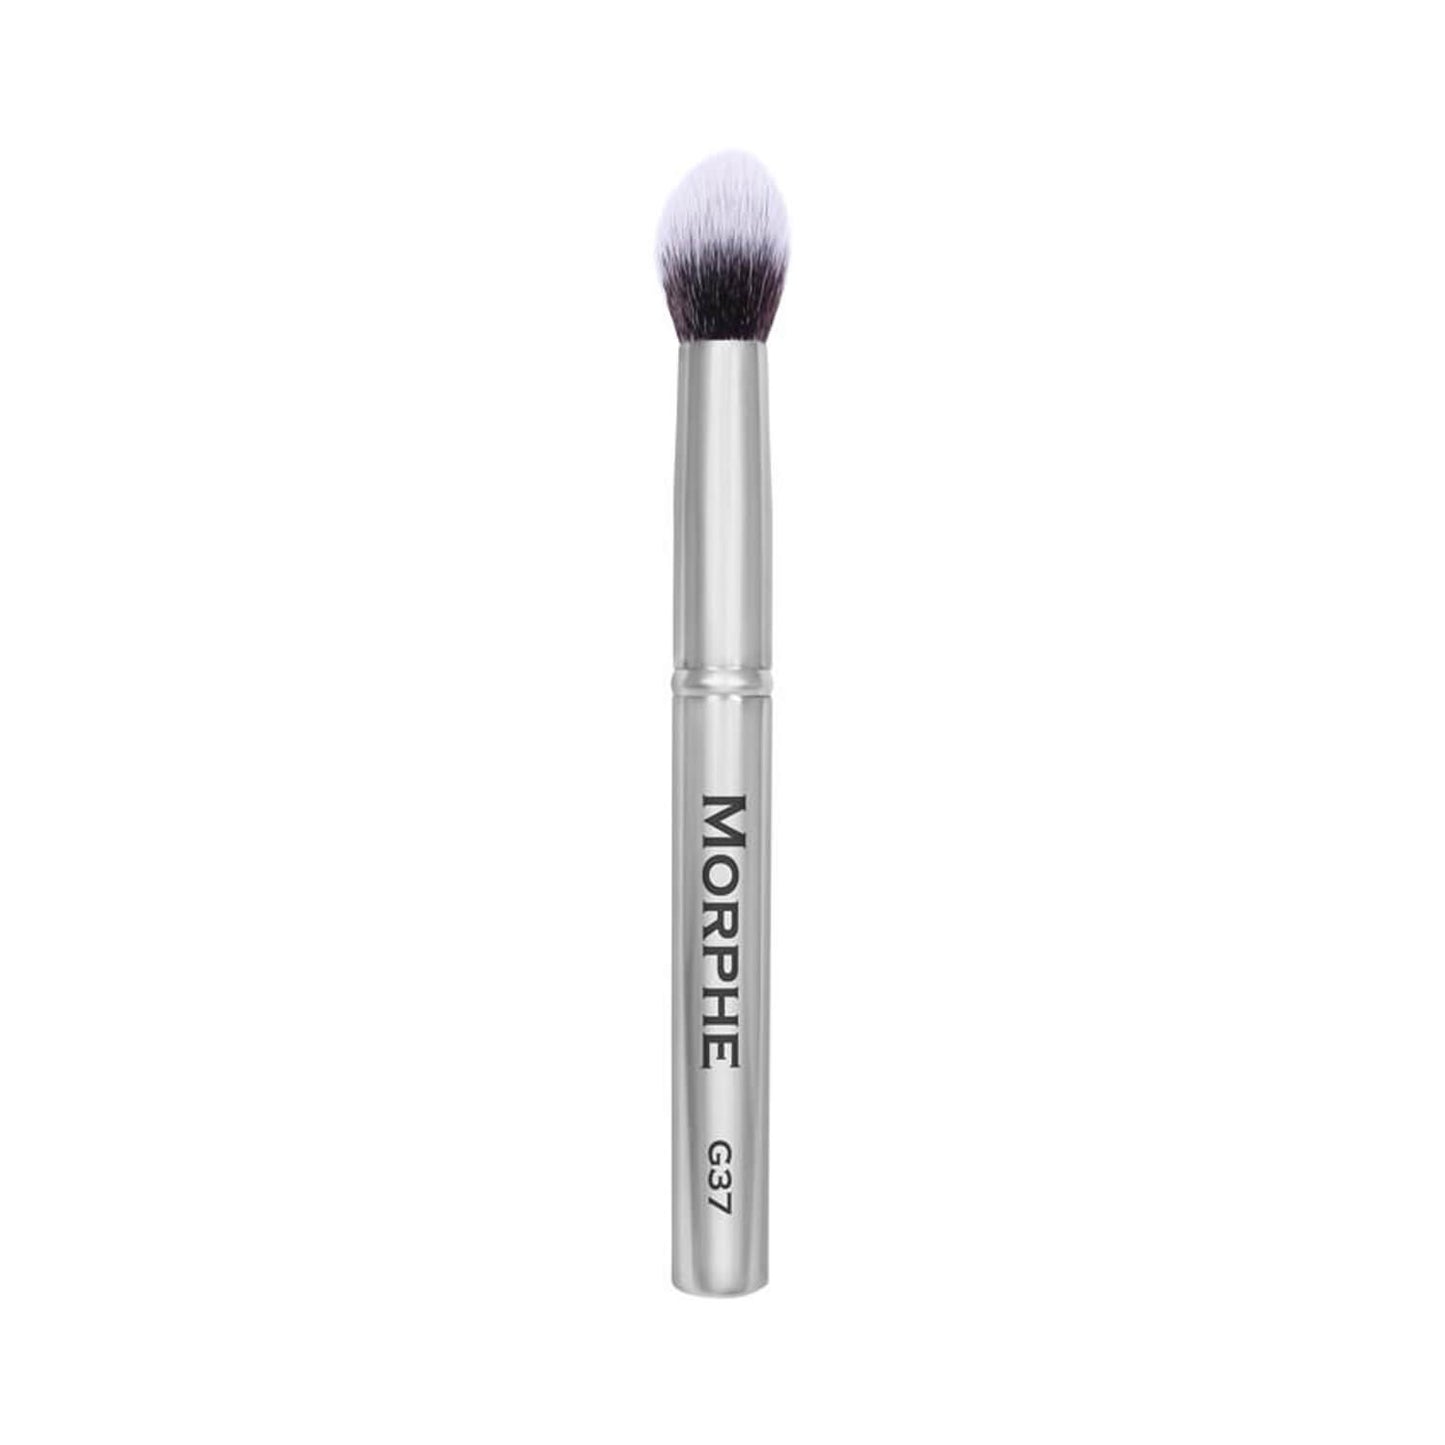 Morphe Cosmetics G37 Pointed Powder Contour Brush